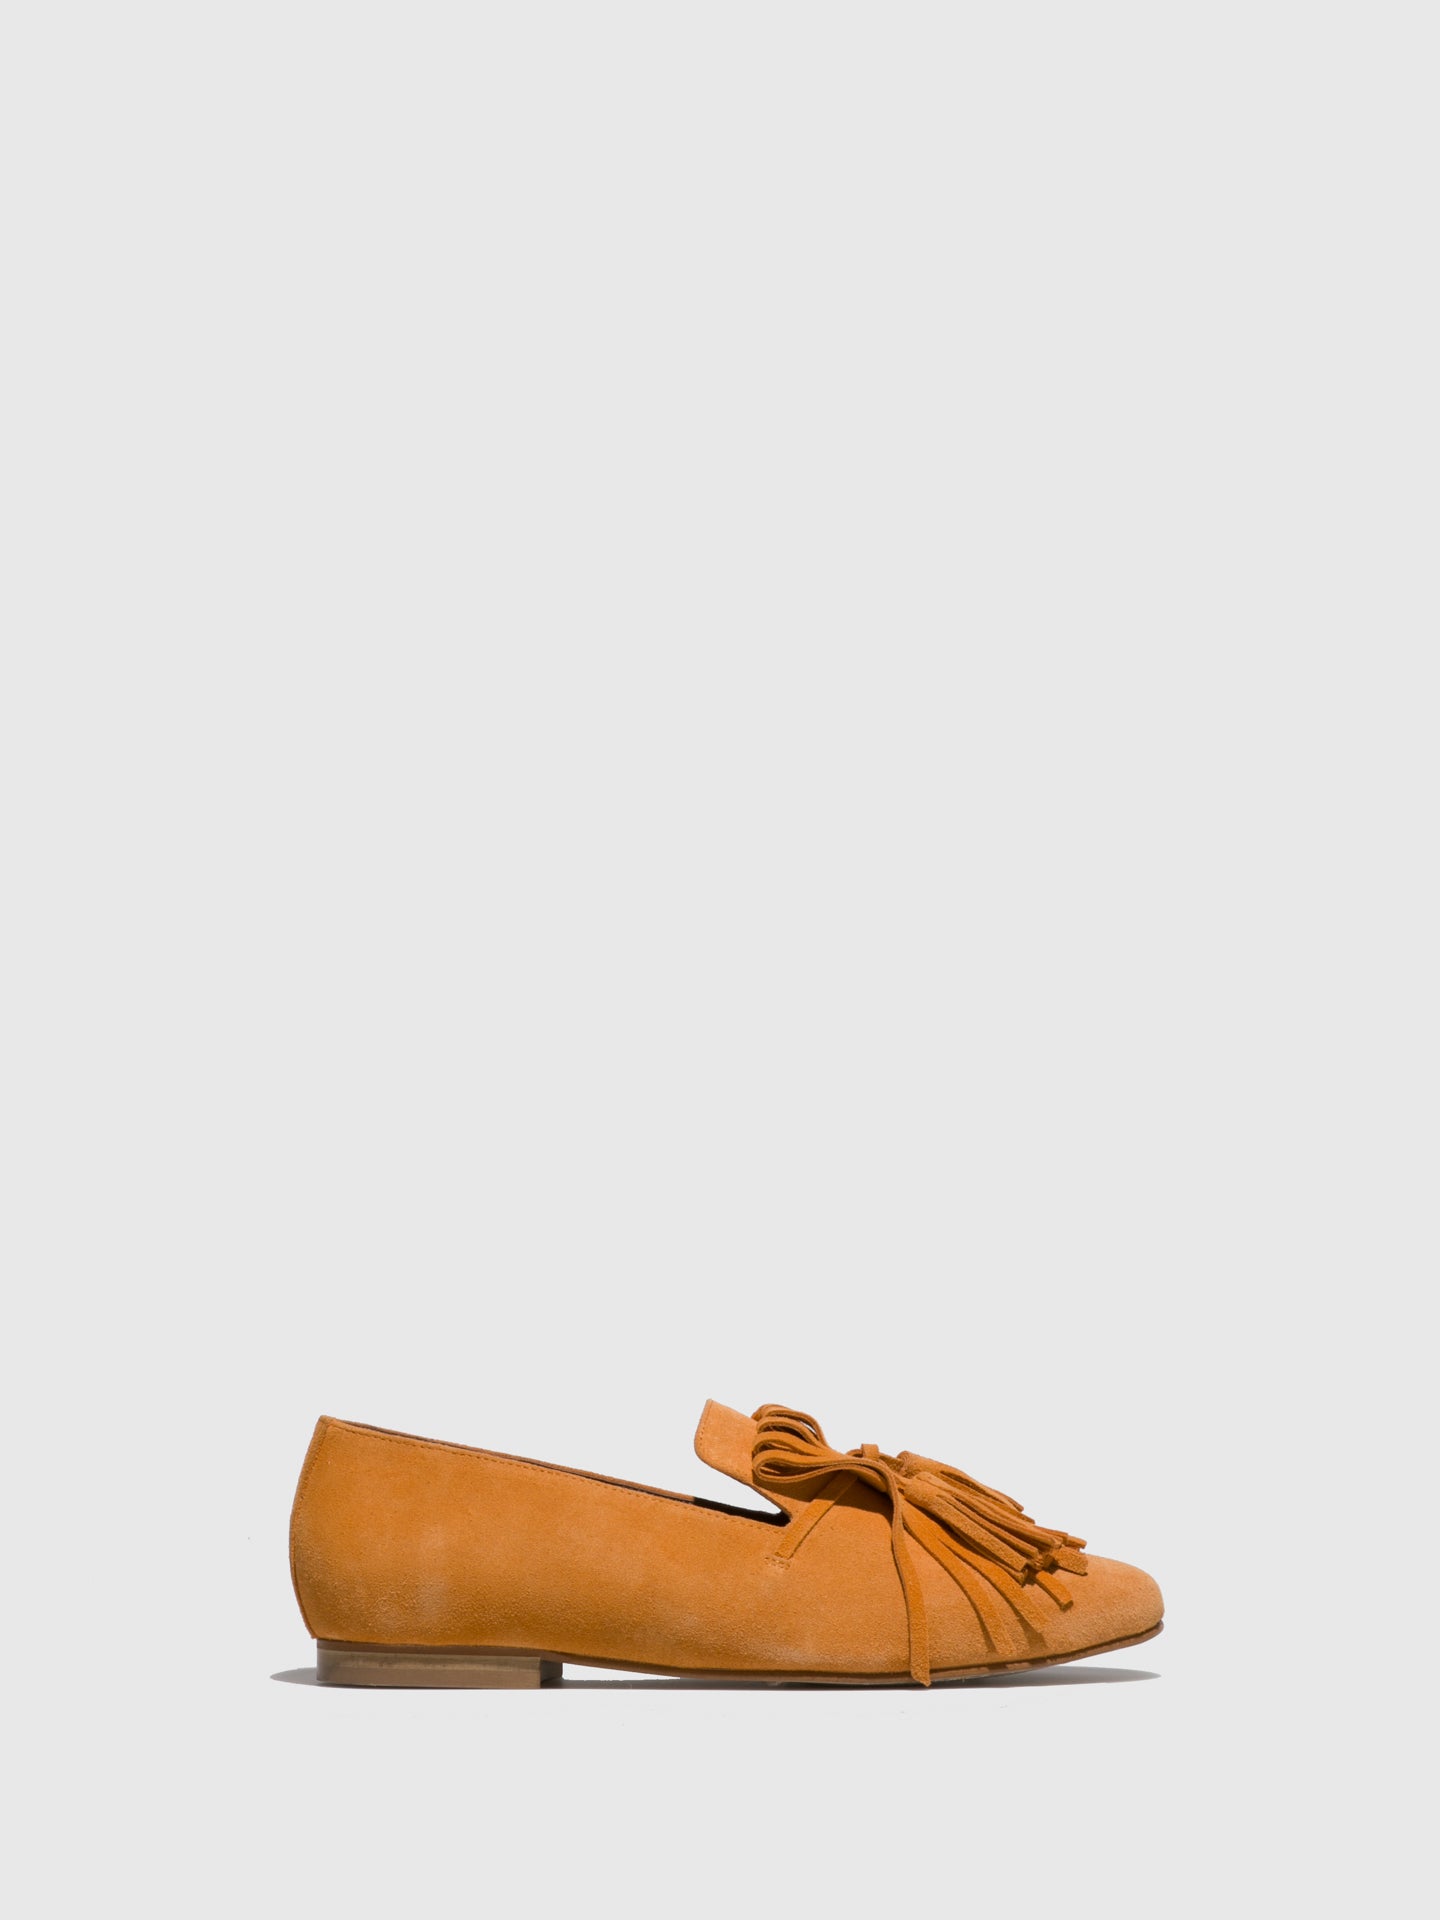 JJ Heitor Orange Suede Loafers Shoes